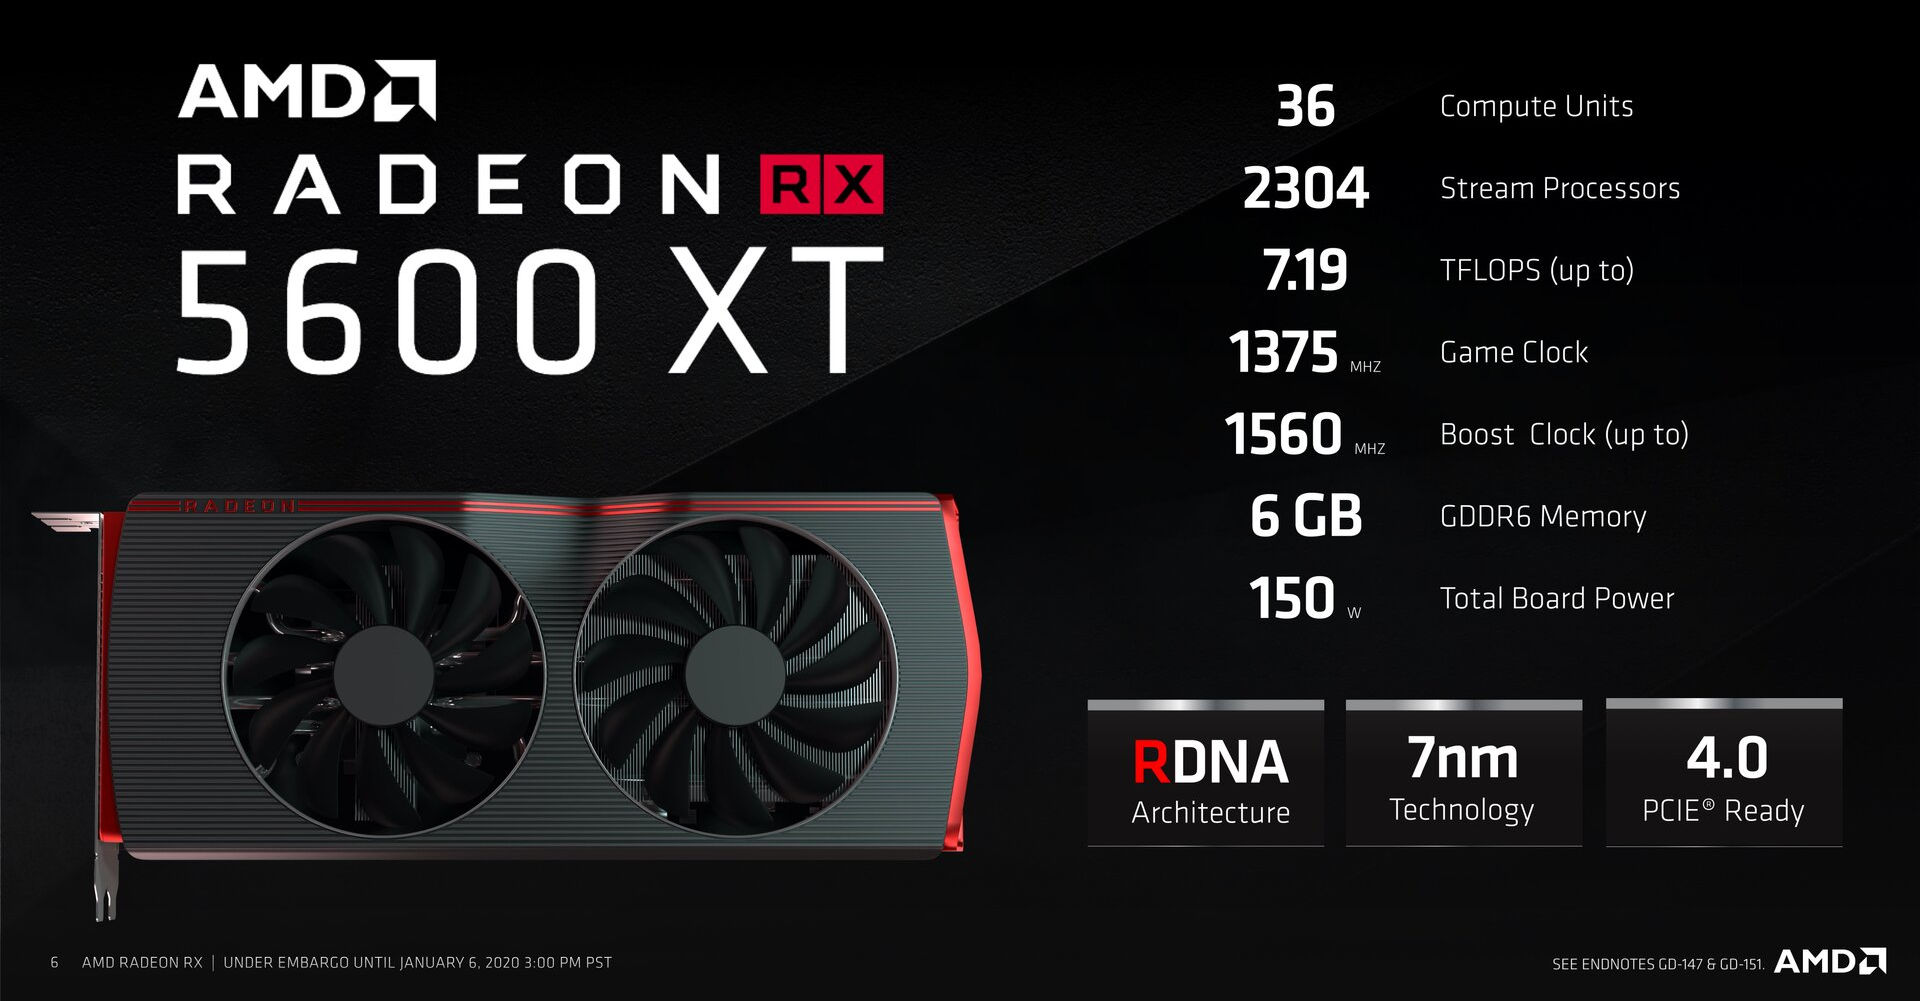 Amd Introduces Radeon Rx 5600 Xt For 279 Usd Videocardz Com